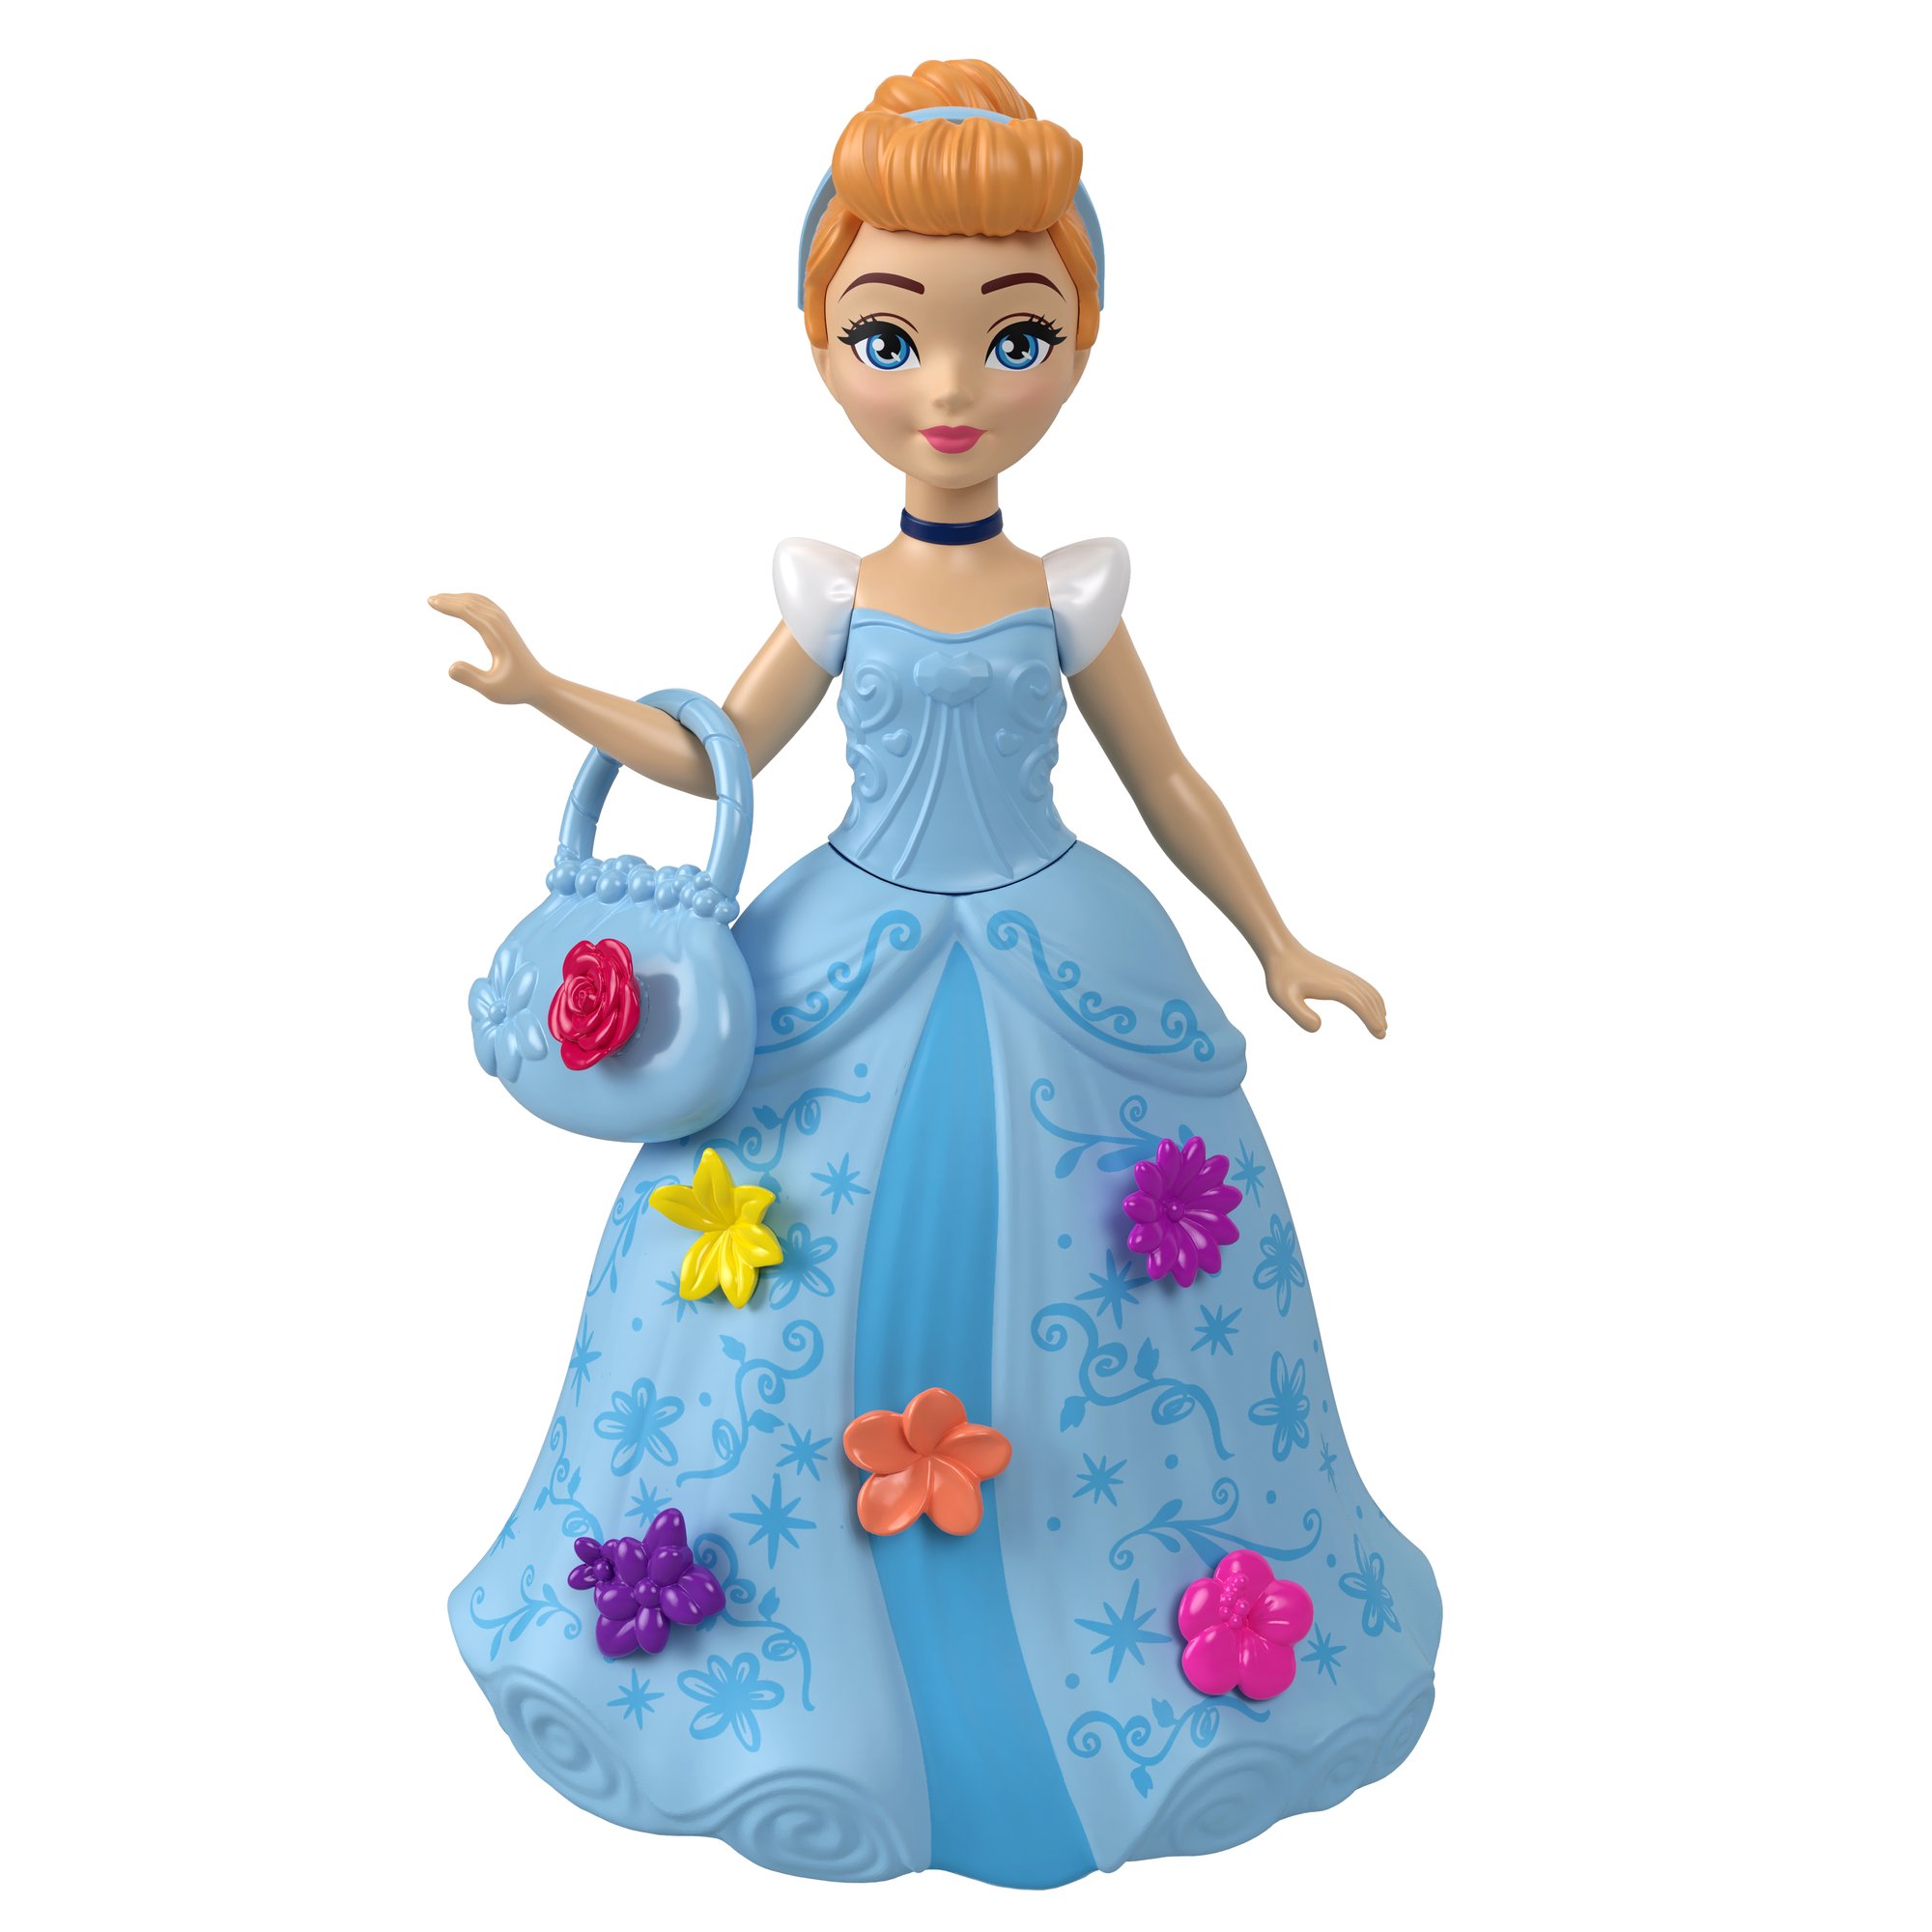 Mattel Disney Princess Celebration Pack - Shop Action Figures & Dolls at  H-E-B